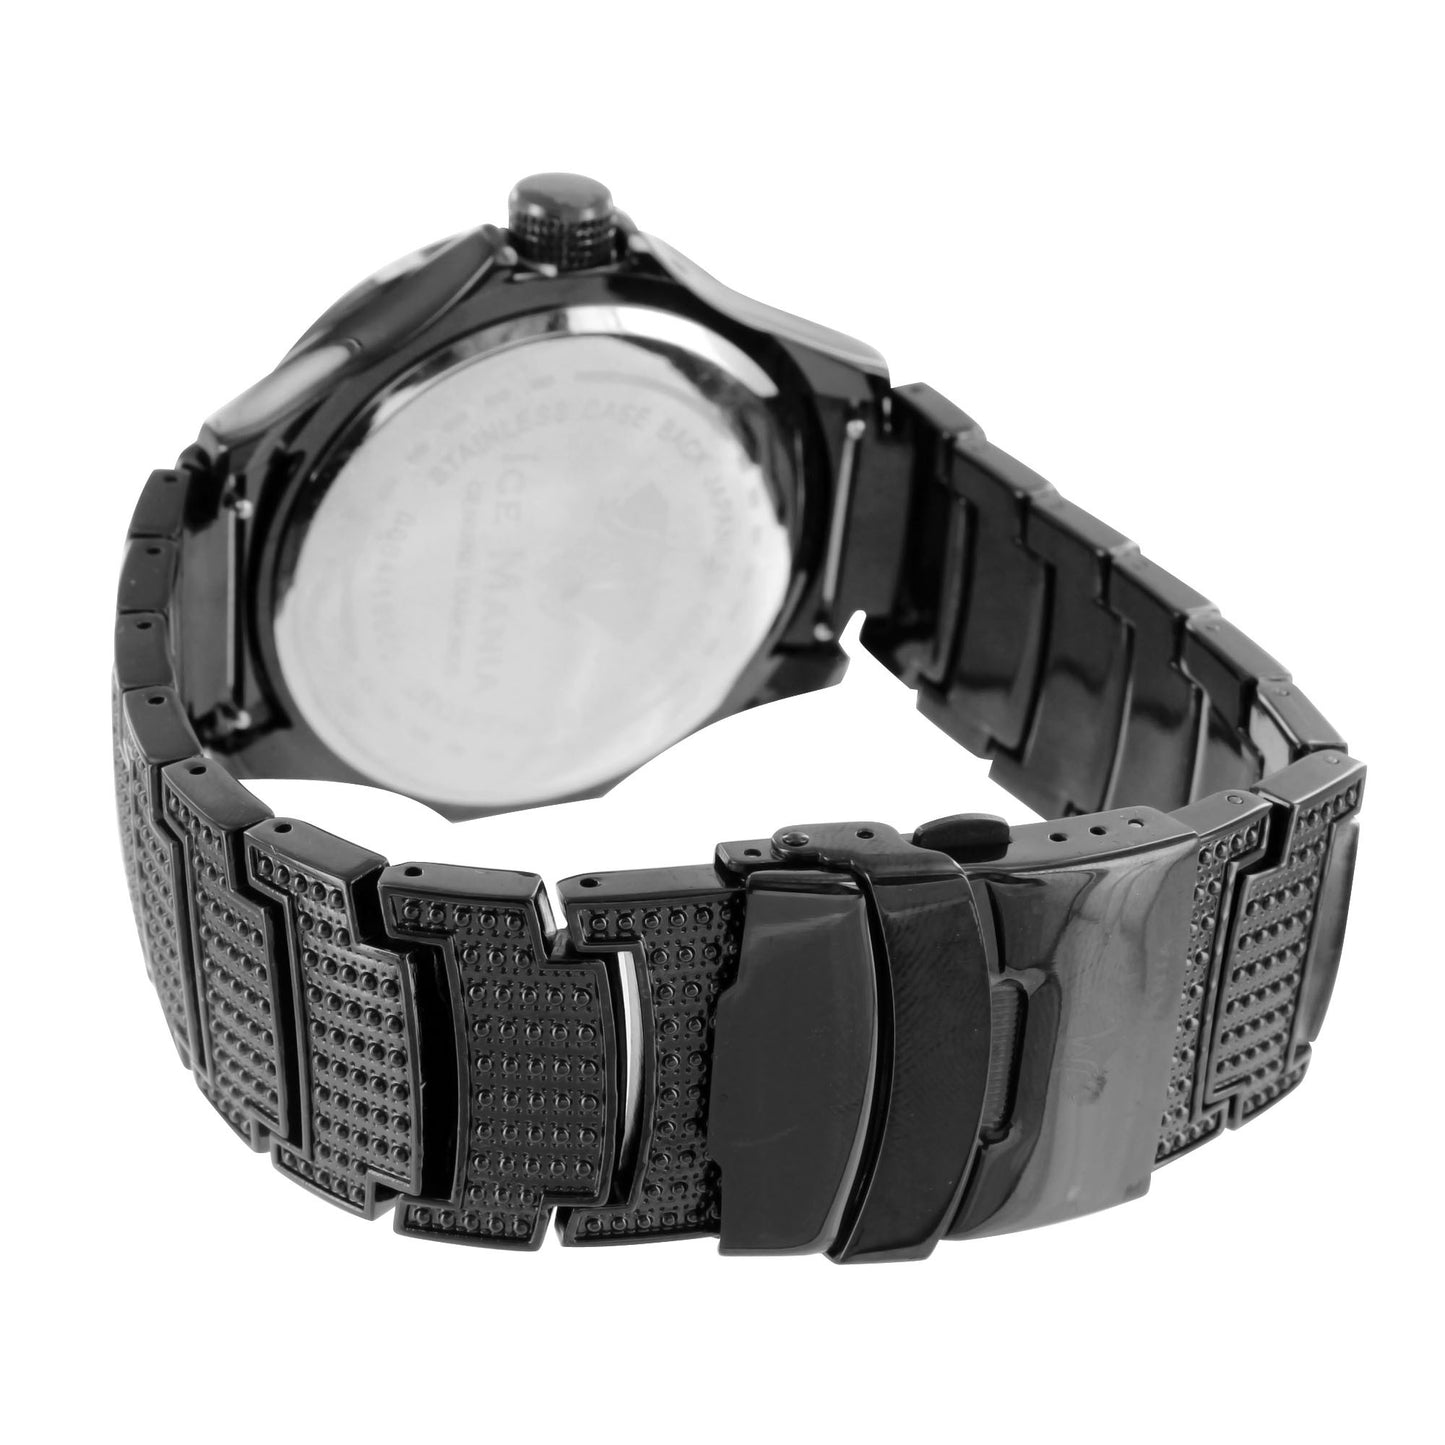 Black & White Diamond Bezel Watch With Roman Numeral